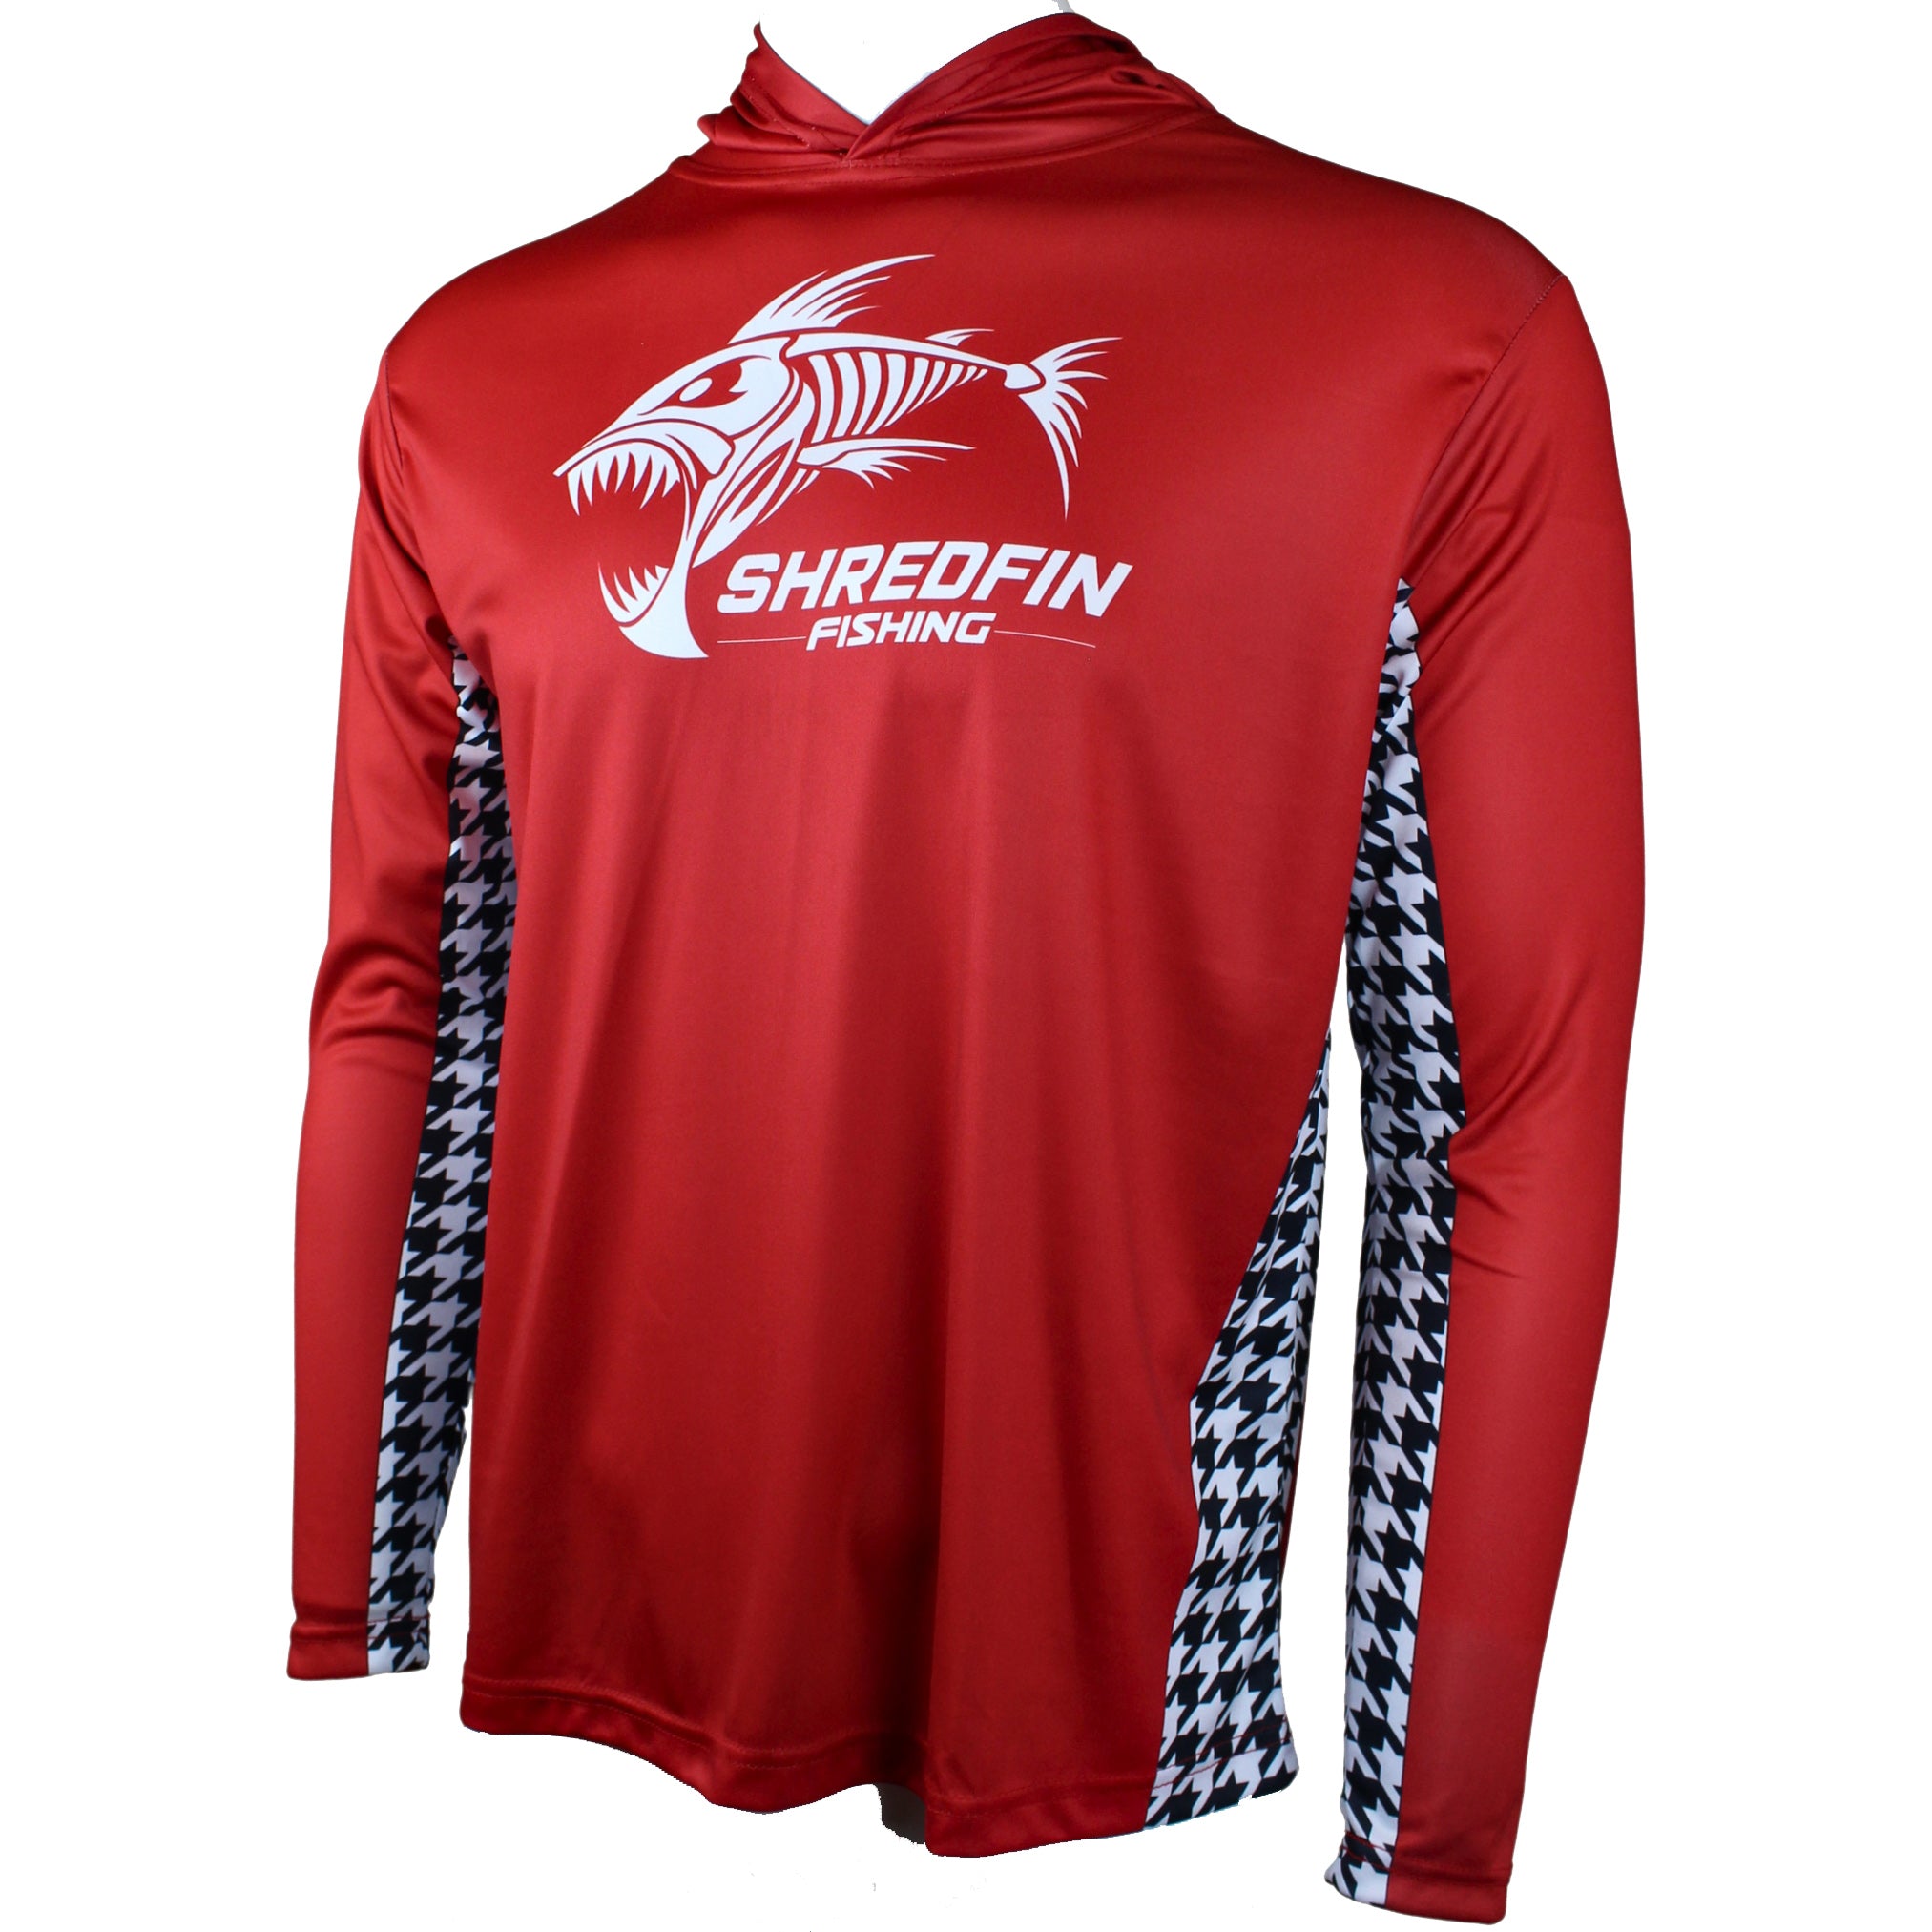 ShredFin Tuscaloosa Crimson Hooded Performance Shirt XL